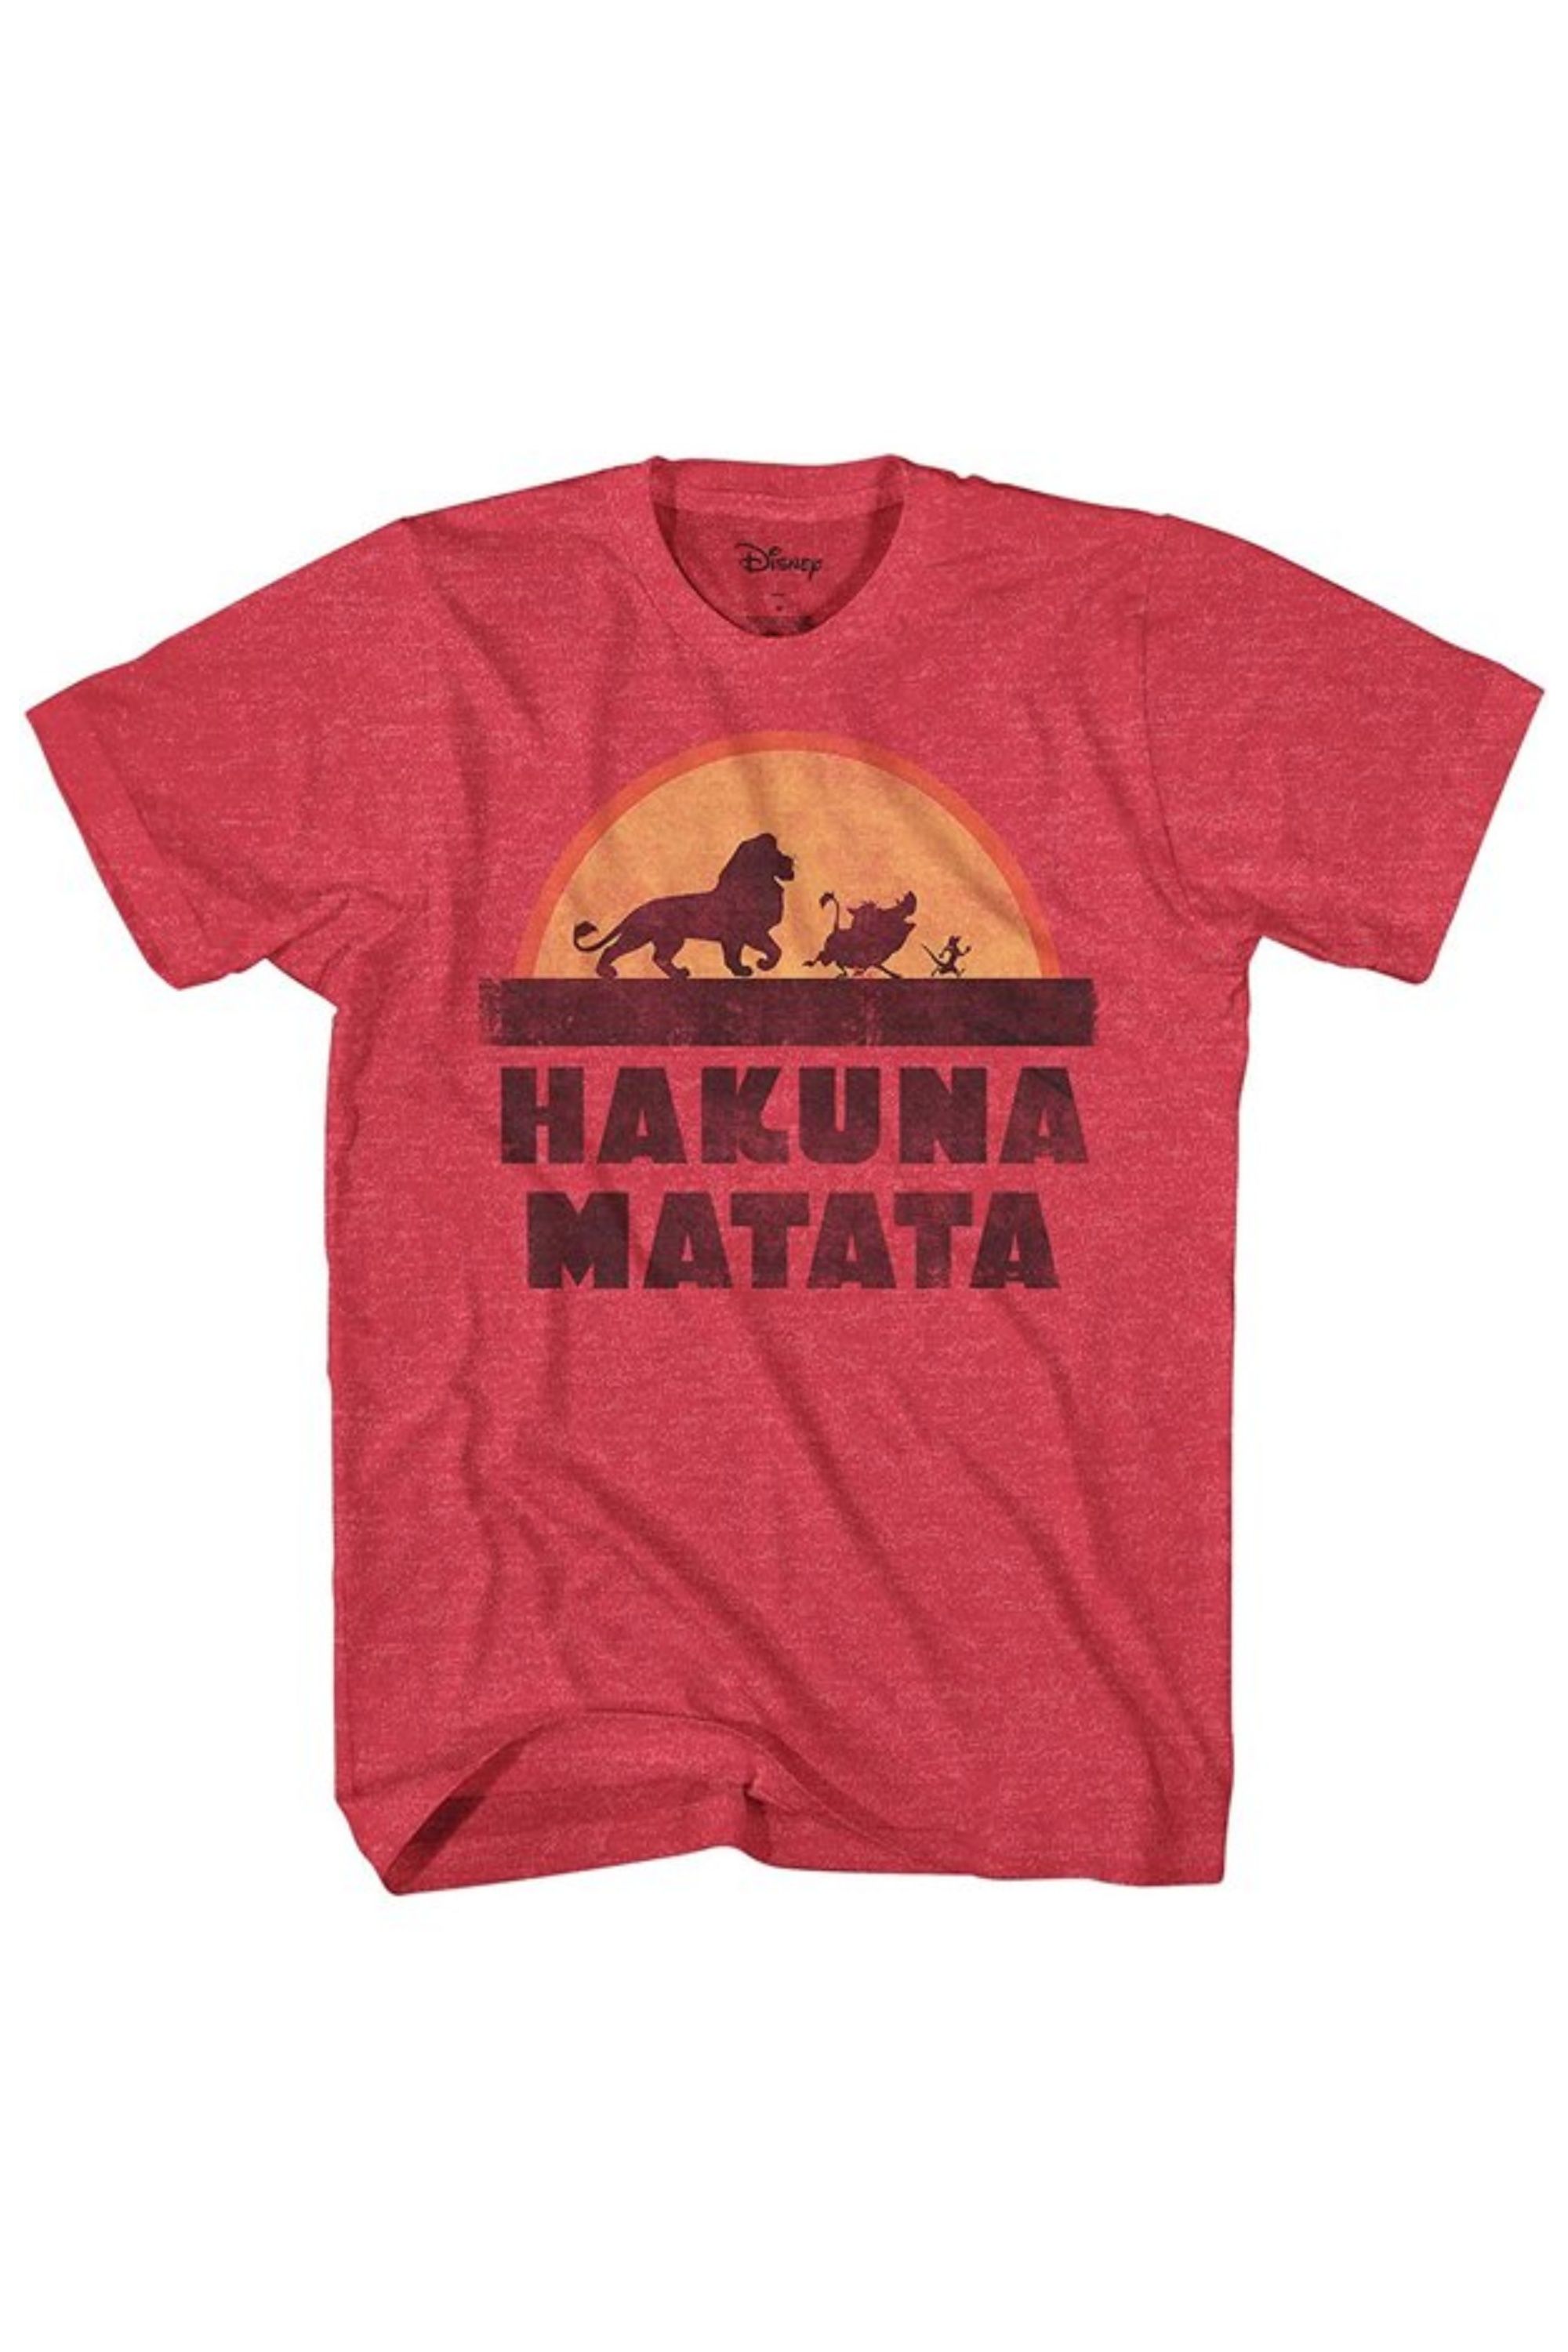 Hakuna Matata The Lion King T-Shirt